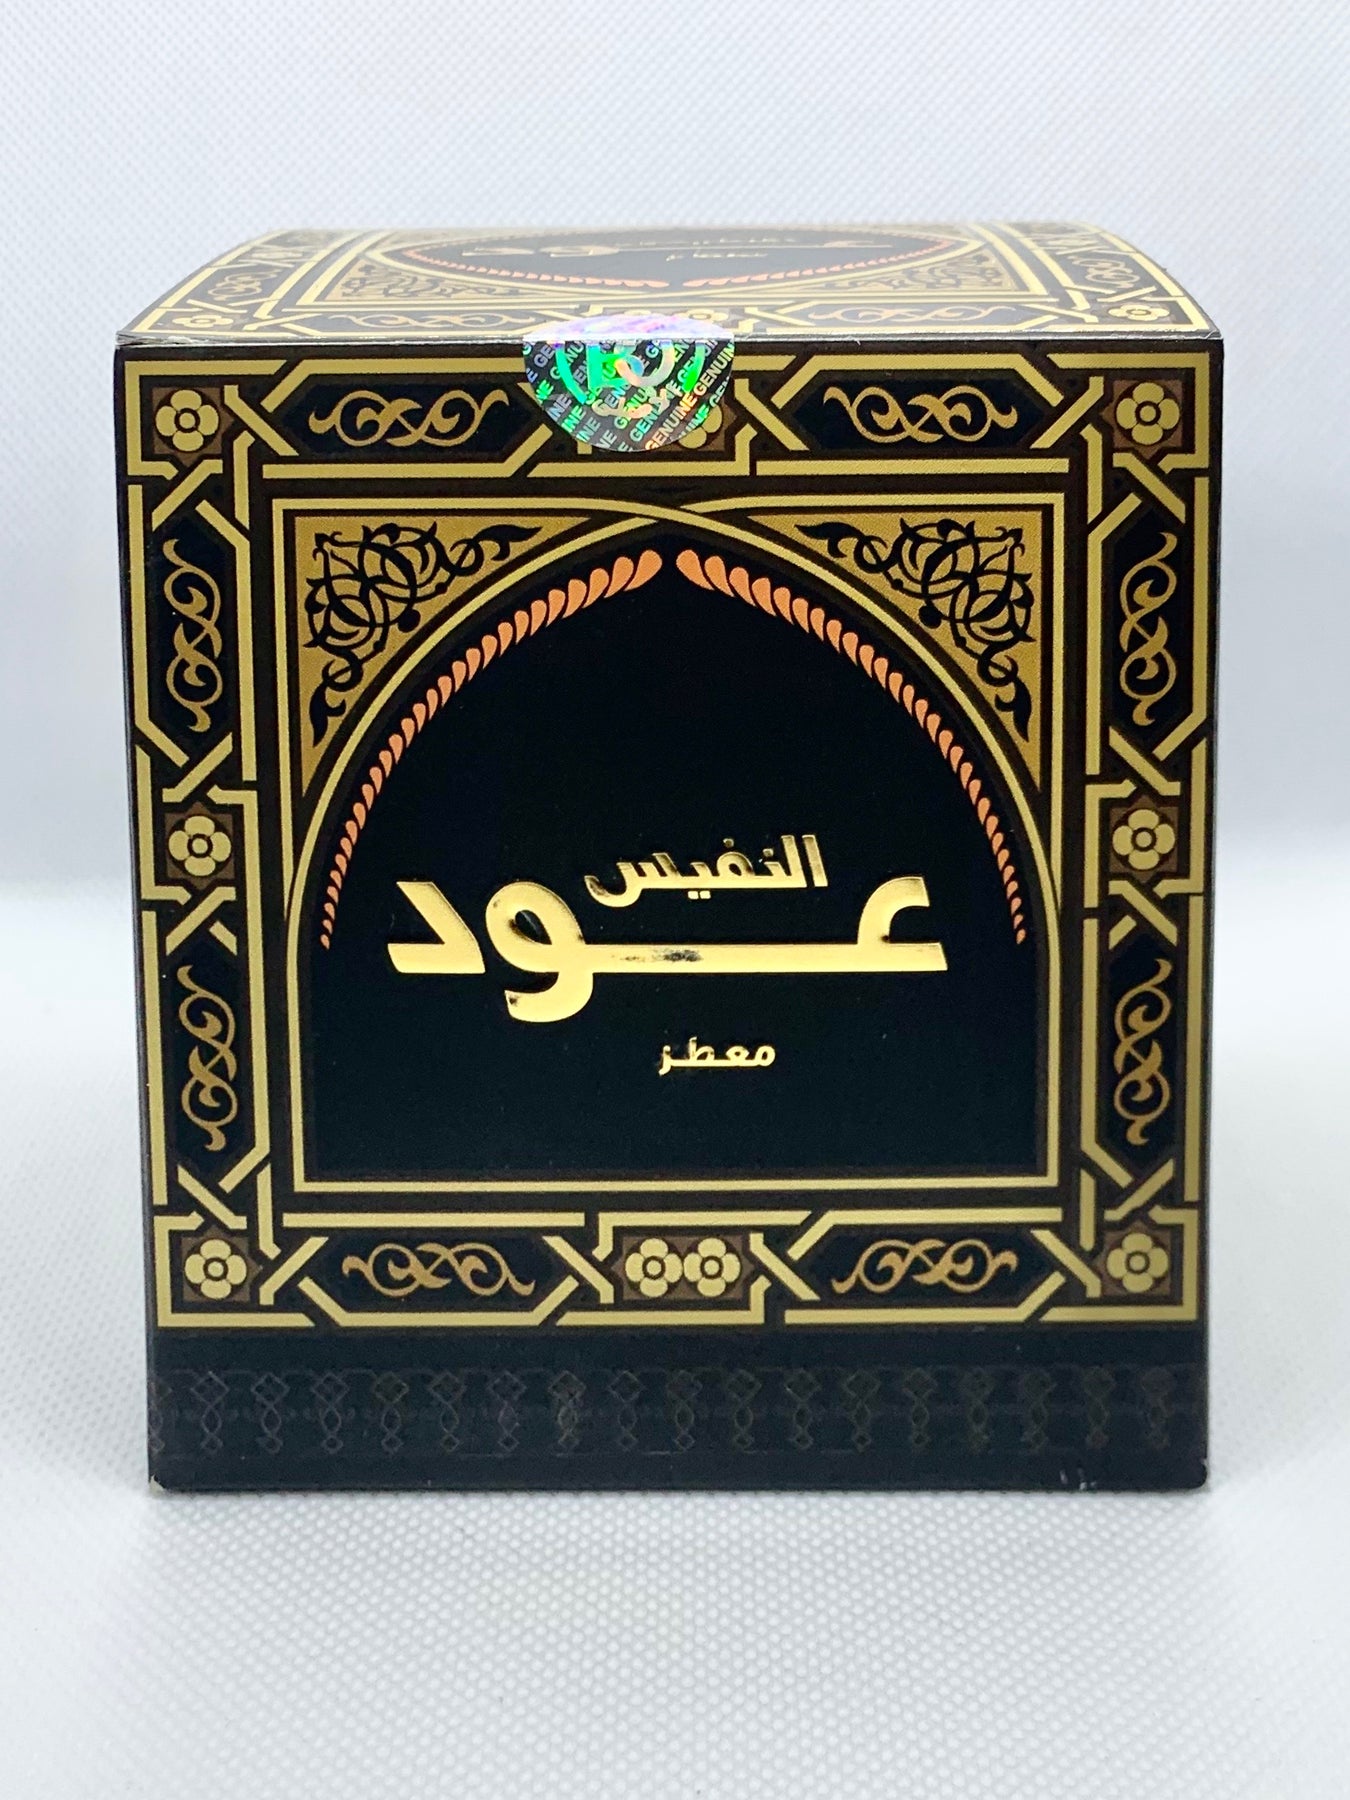 Bakhoor Oud Alnafees Incense Agarwood Perfume of Saudi Arabia - 50 gr